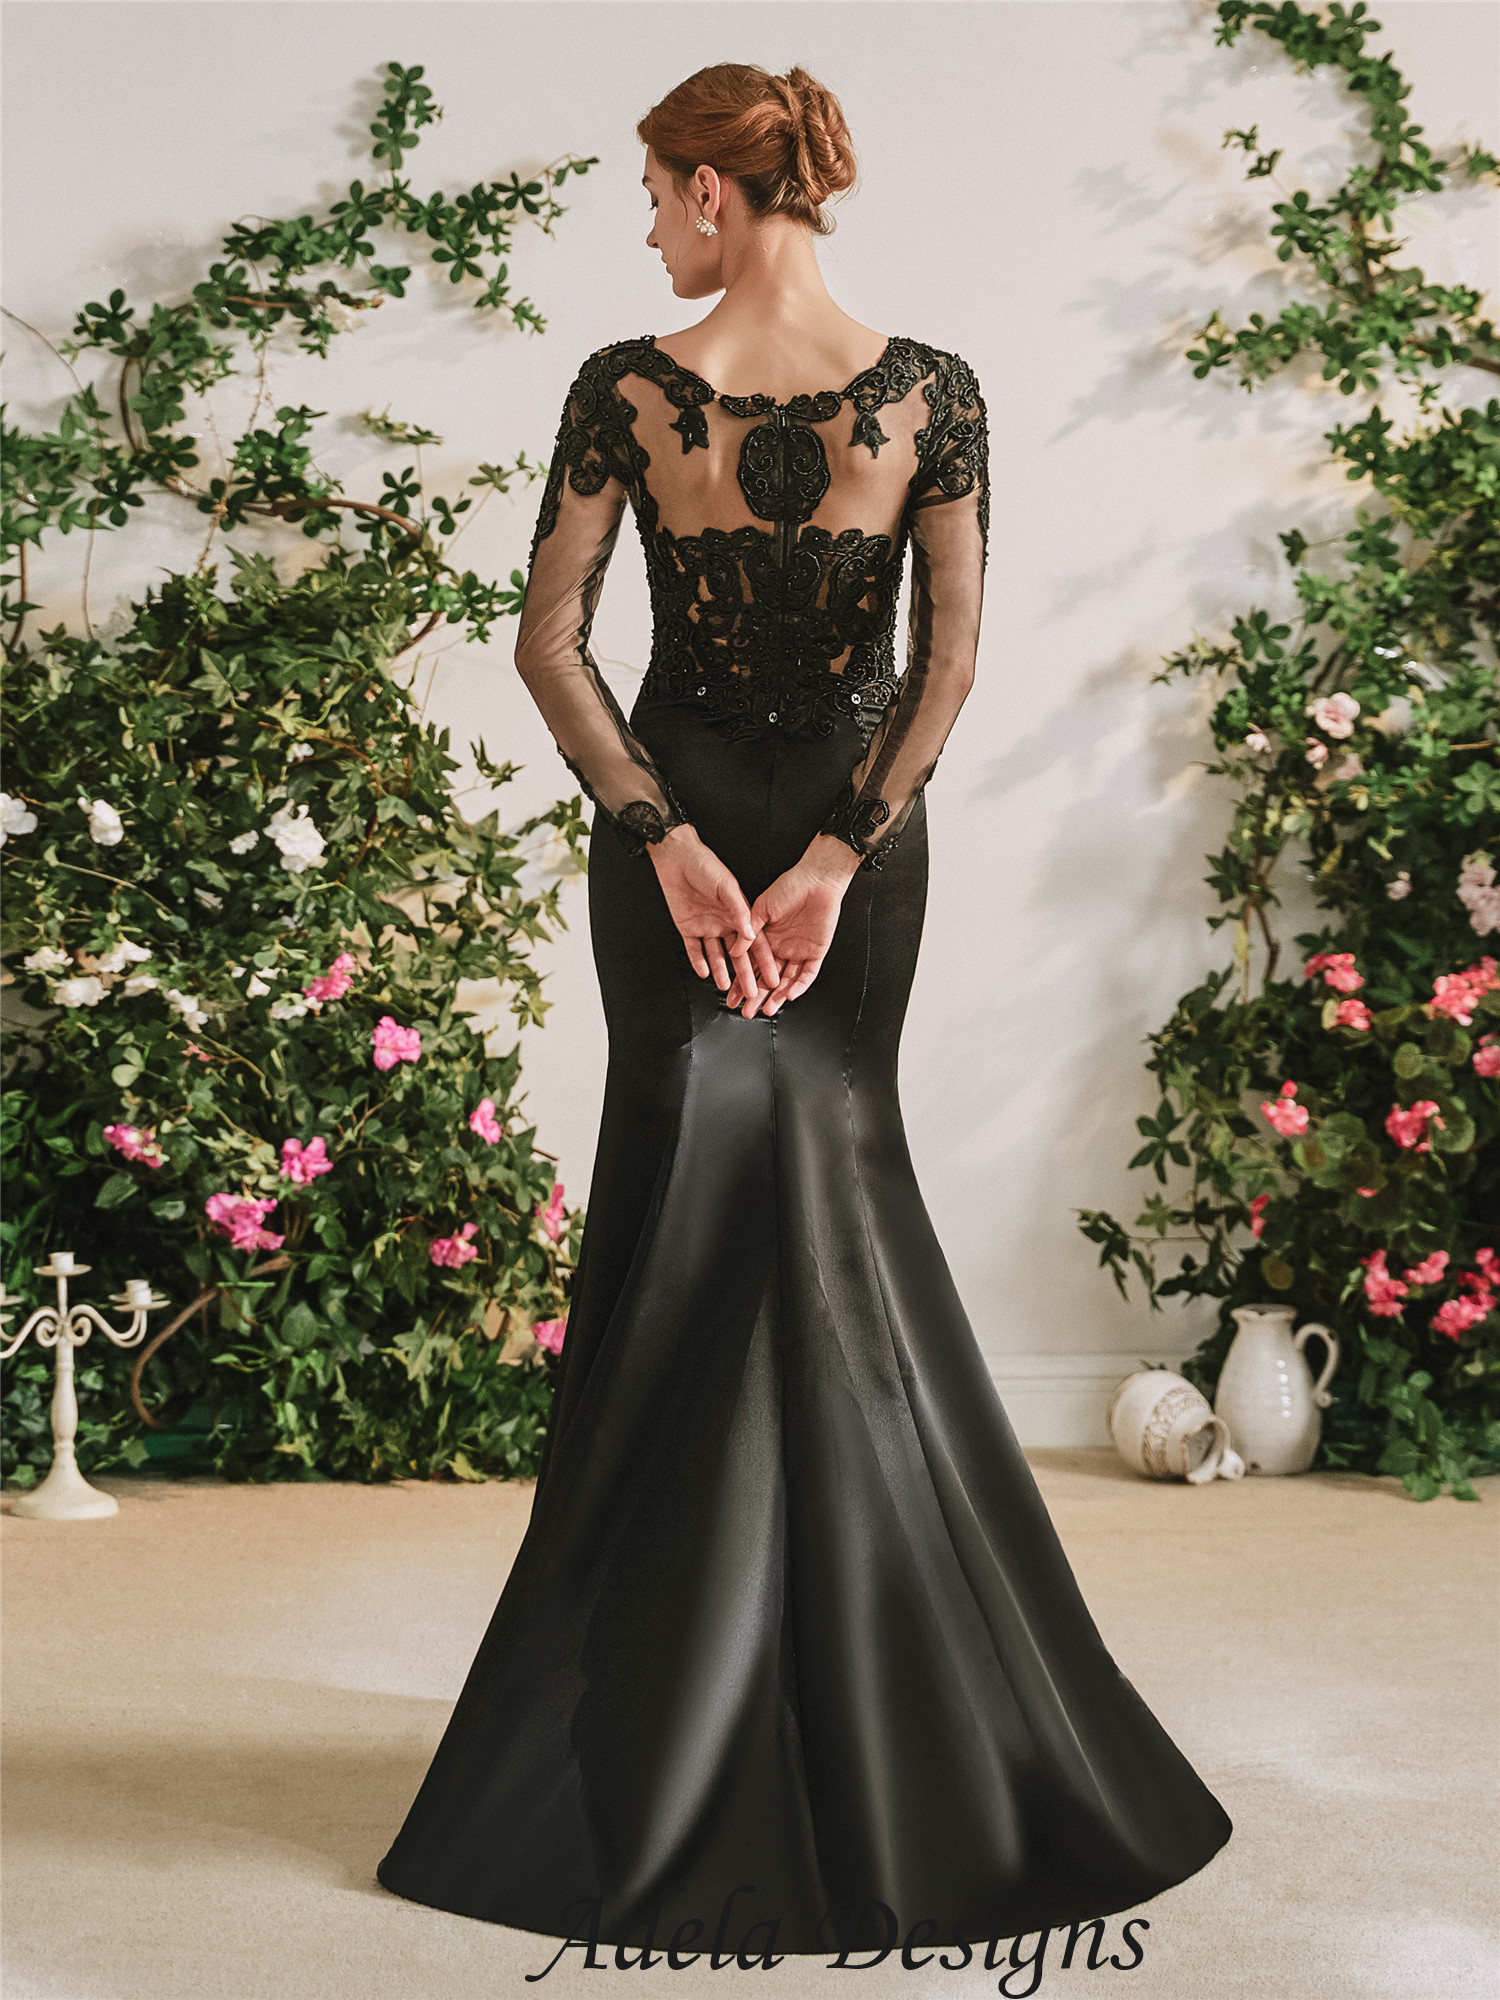 Black Mermaid Gothic Wedding Dress With Detachable Train – Adela Designs